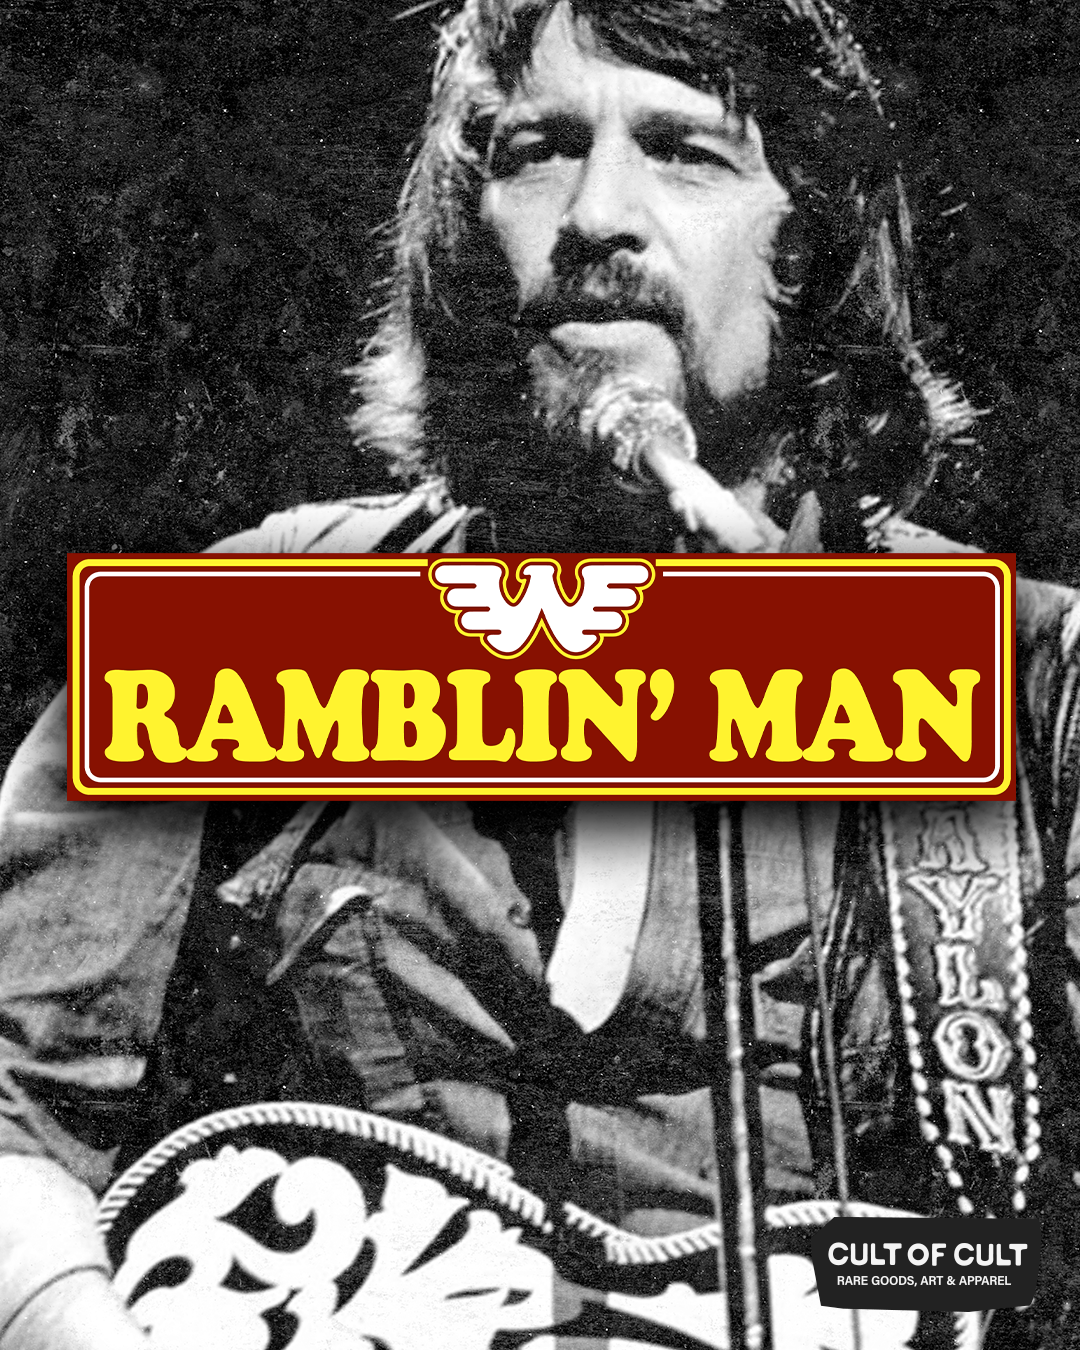 The Ramblin Man Waylon Jennings bumper sticker shown individually